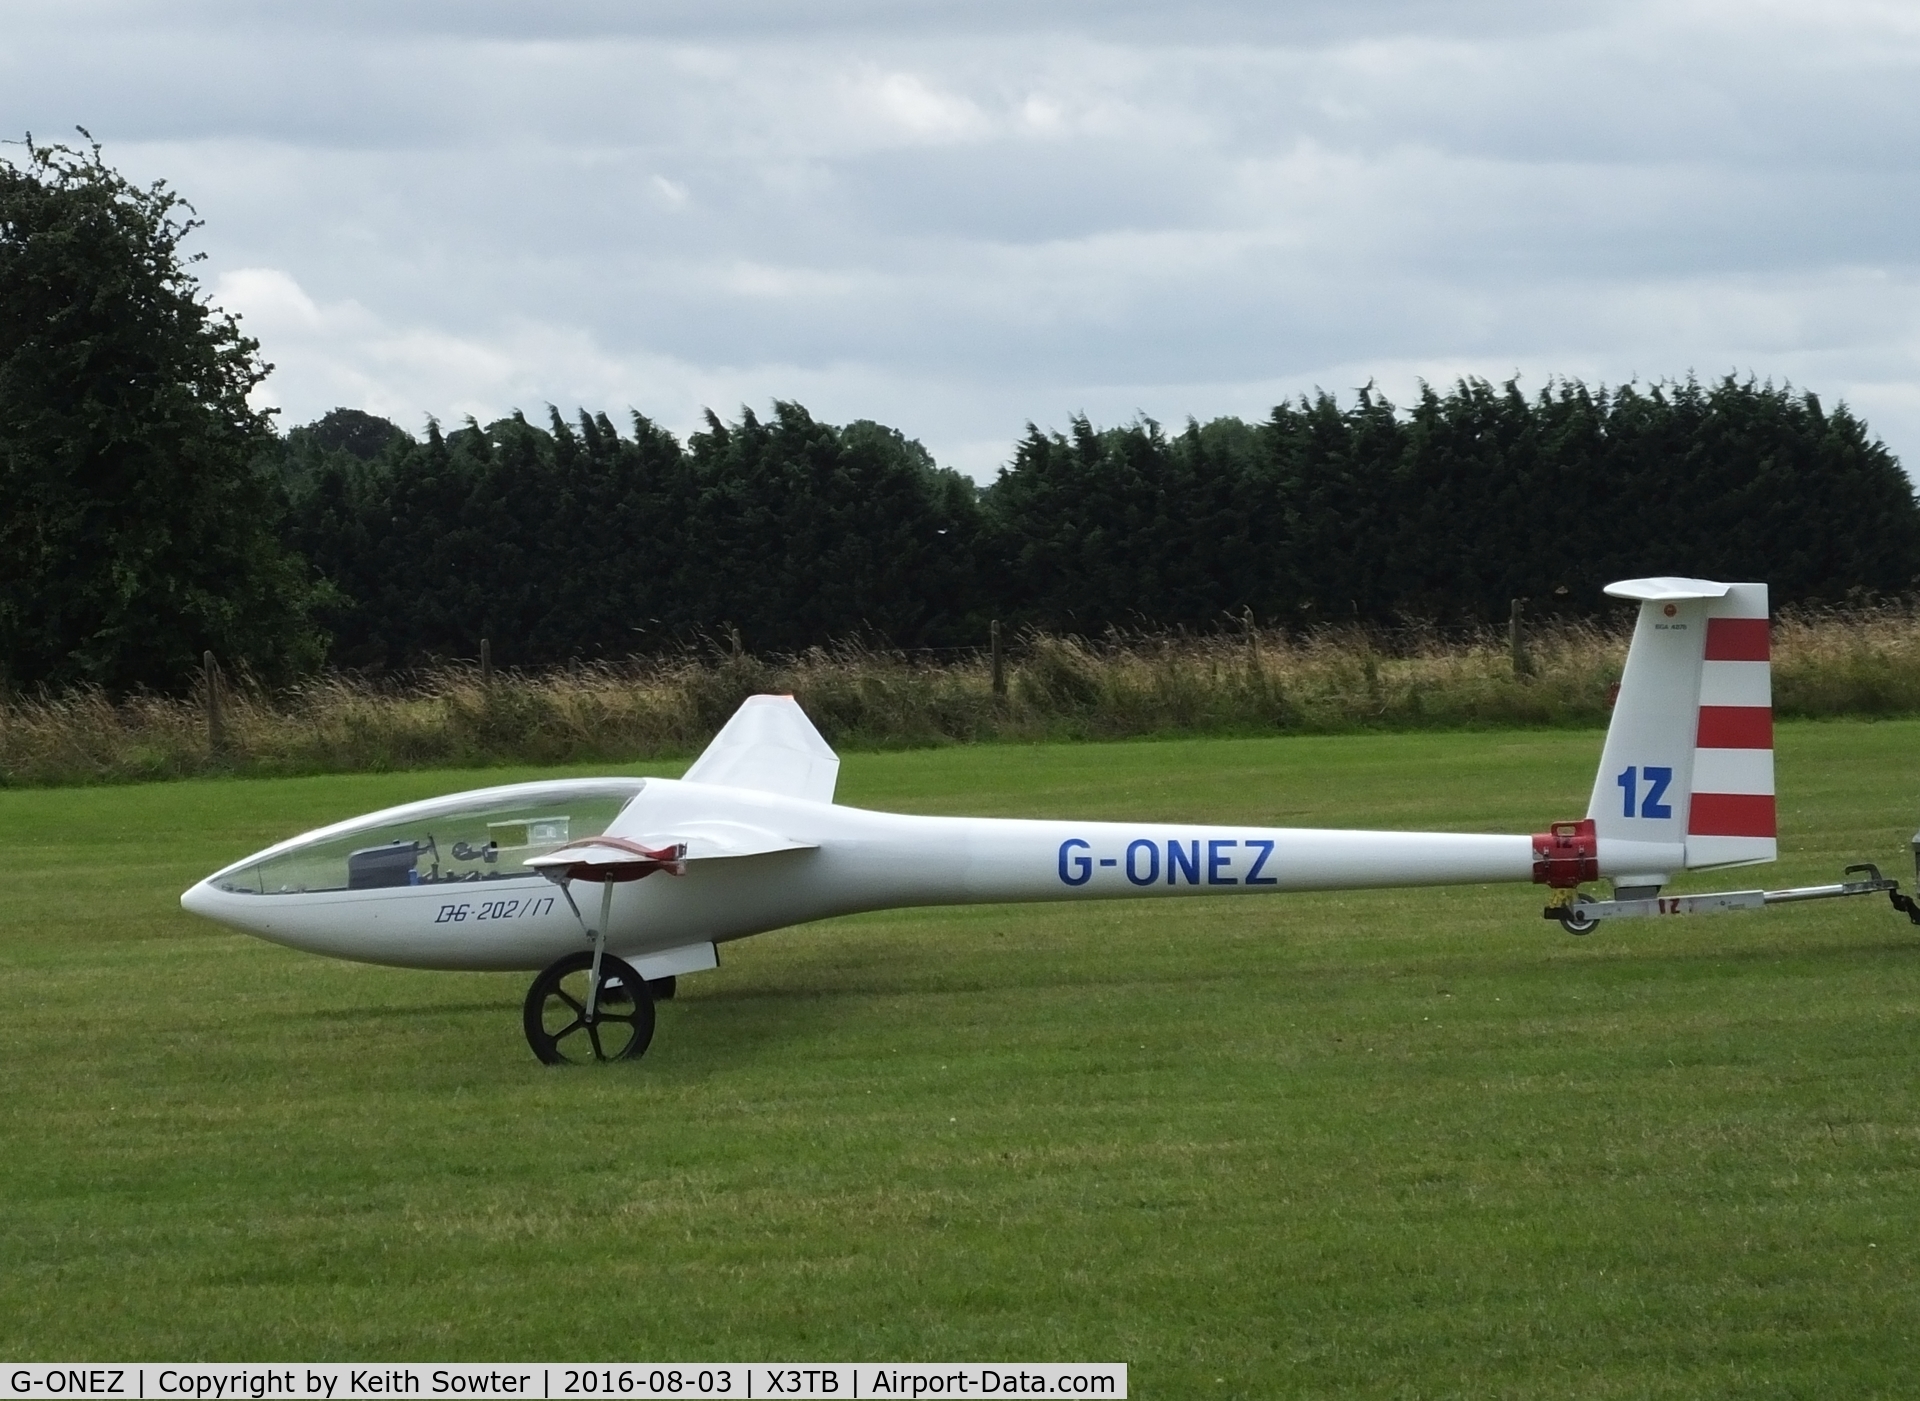 G-ONEZ, 1981 Glaser-Dirks DG-200/17 C/N 2-1431738, Glider Comp